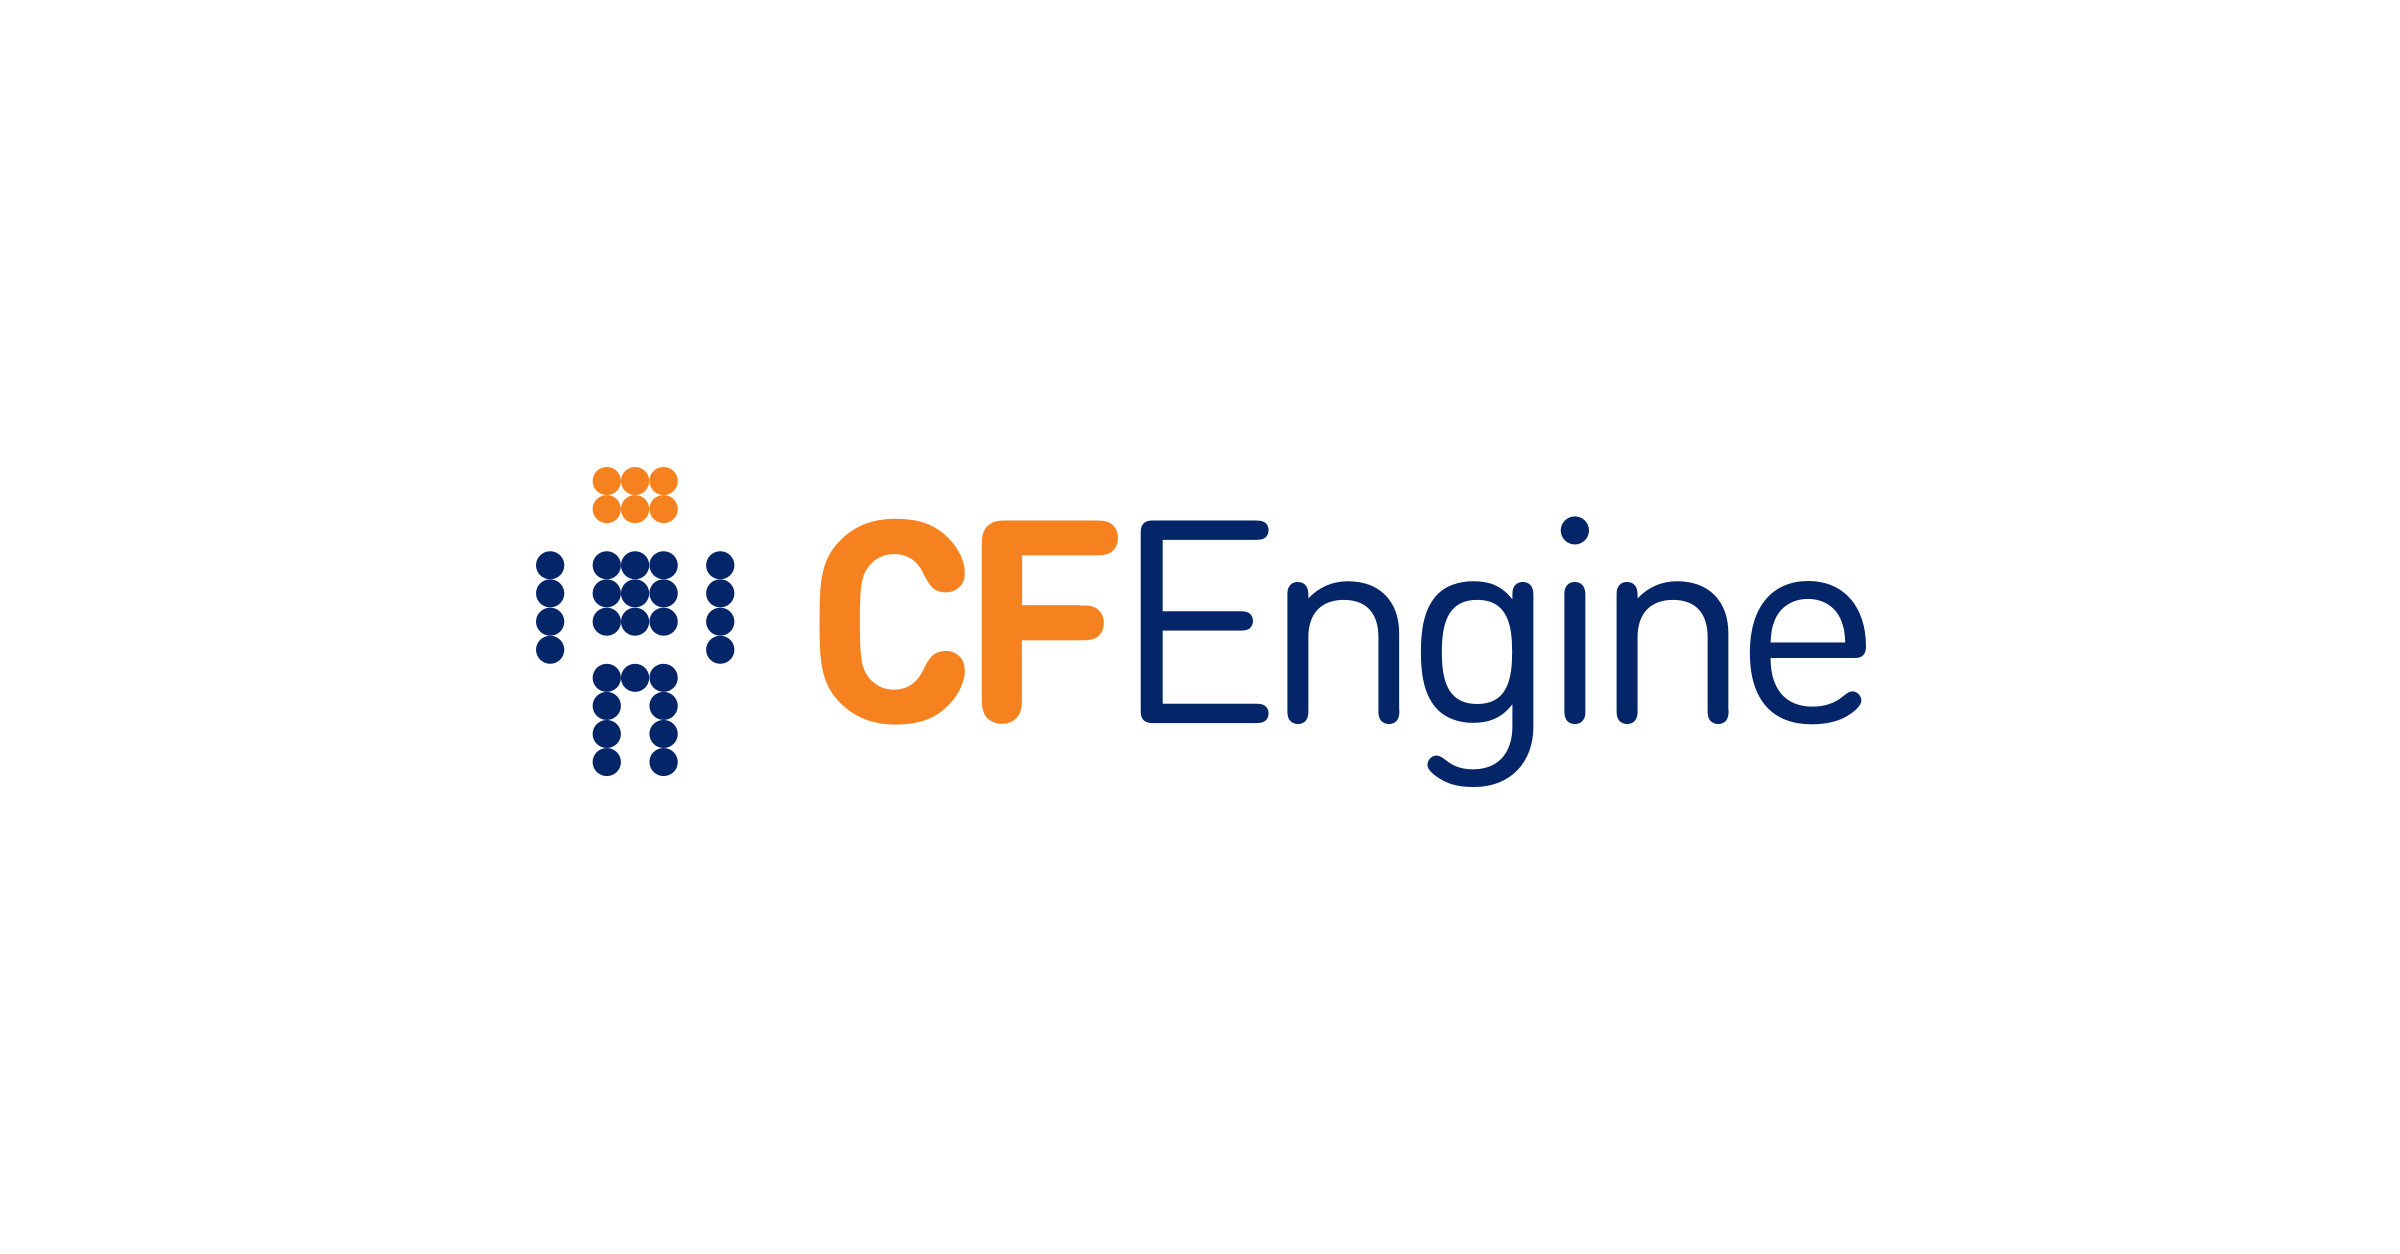 Configuration management tools in DevOps. The logo of CFEngine